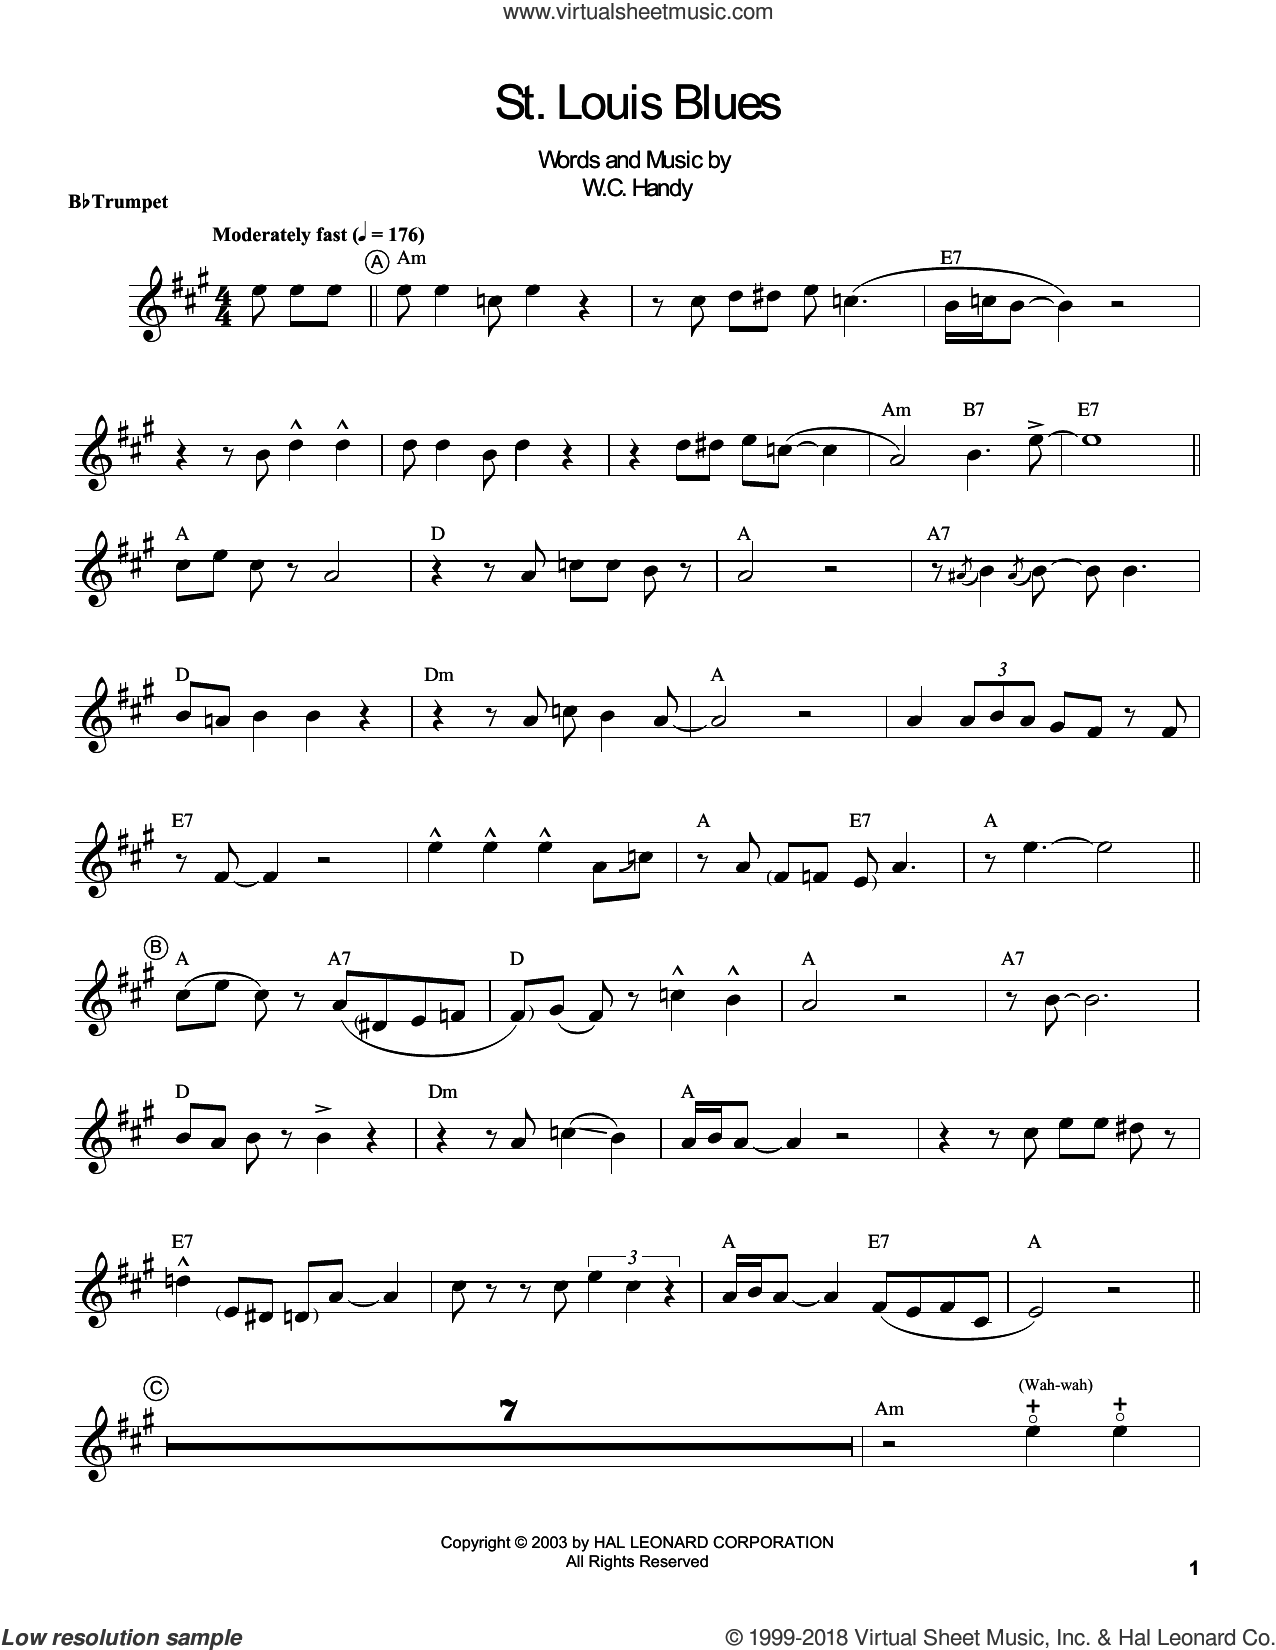 Violin Online Free Violin Sheet Music - St. Louis Blues by W.C. Handy